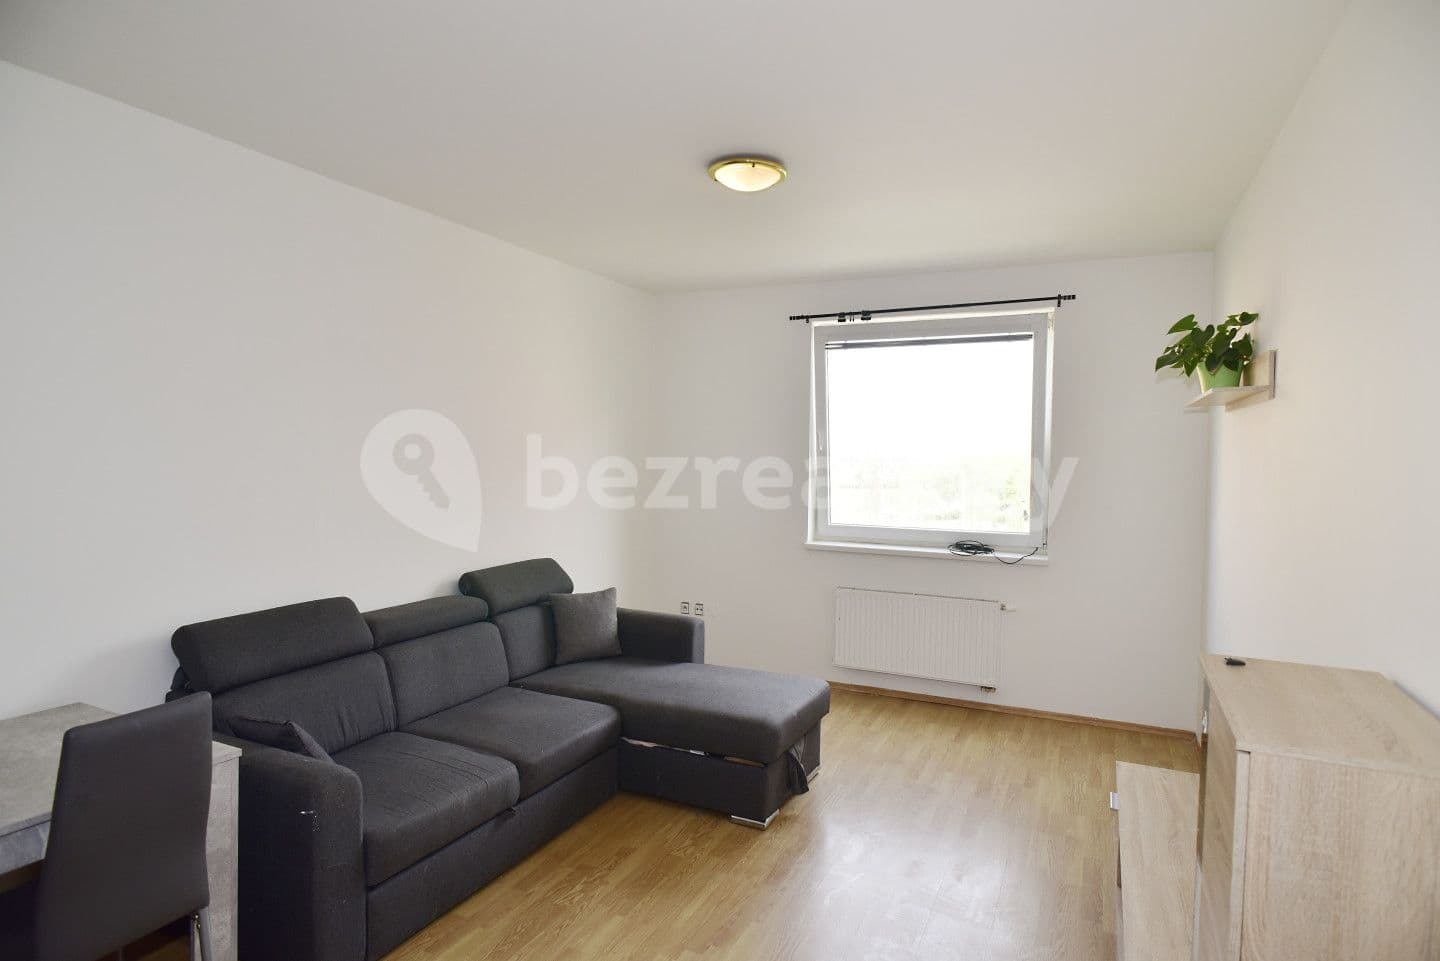 Predaj bytu 2-izbový 47 m², Buková, Jihlava, Kraj Vysočina